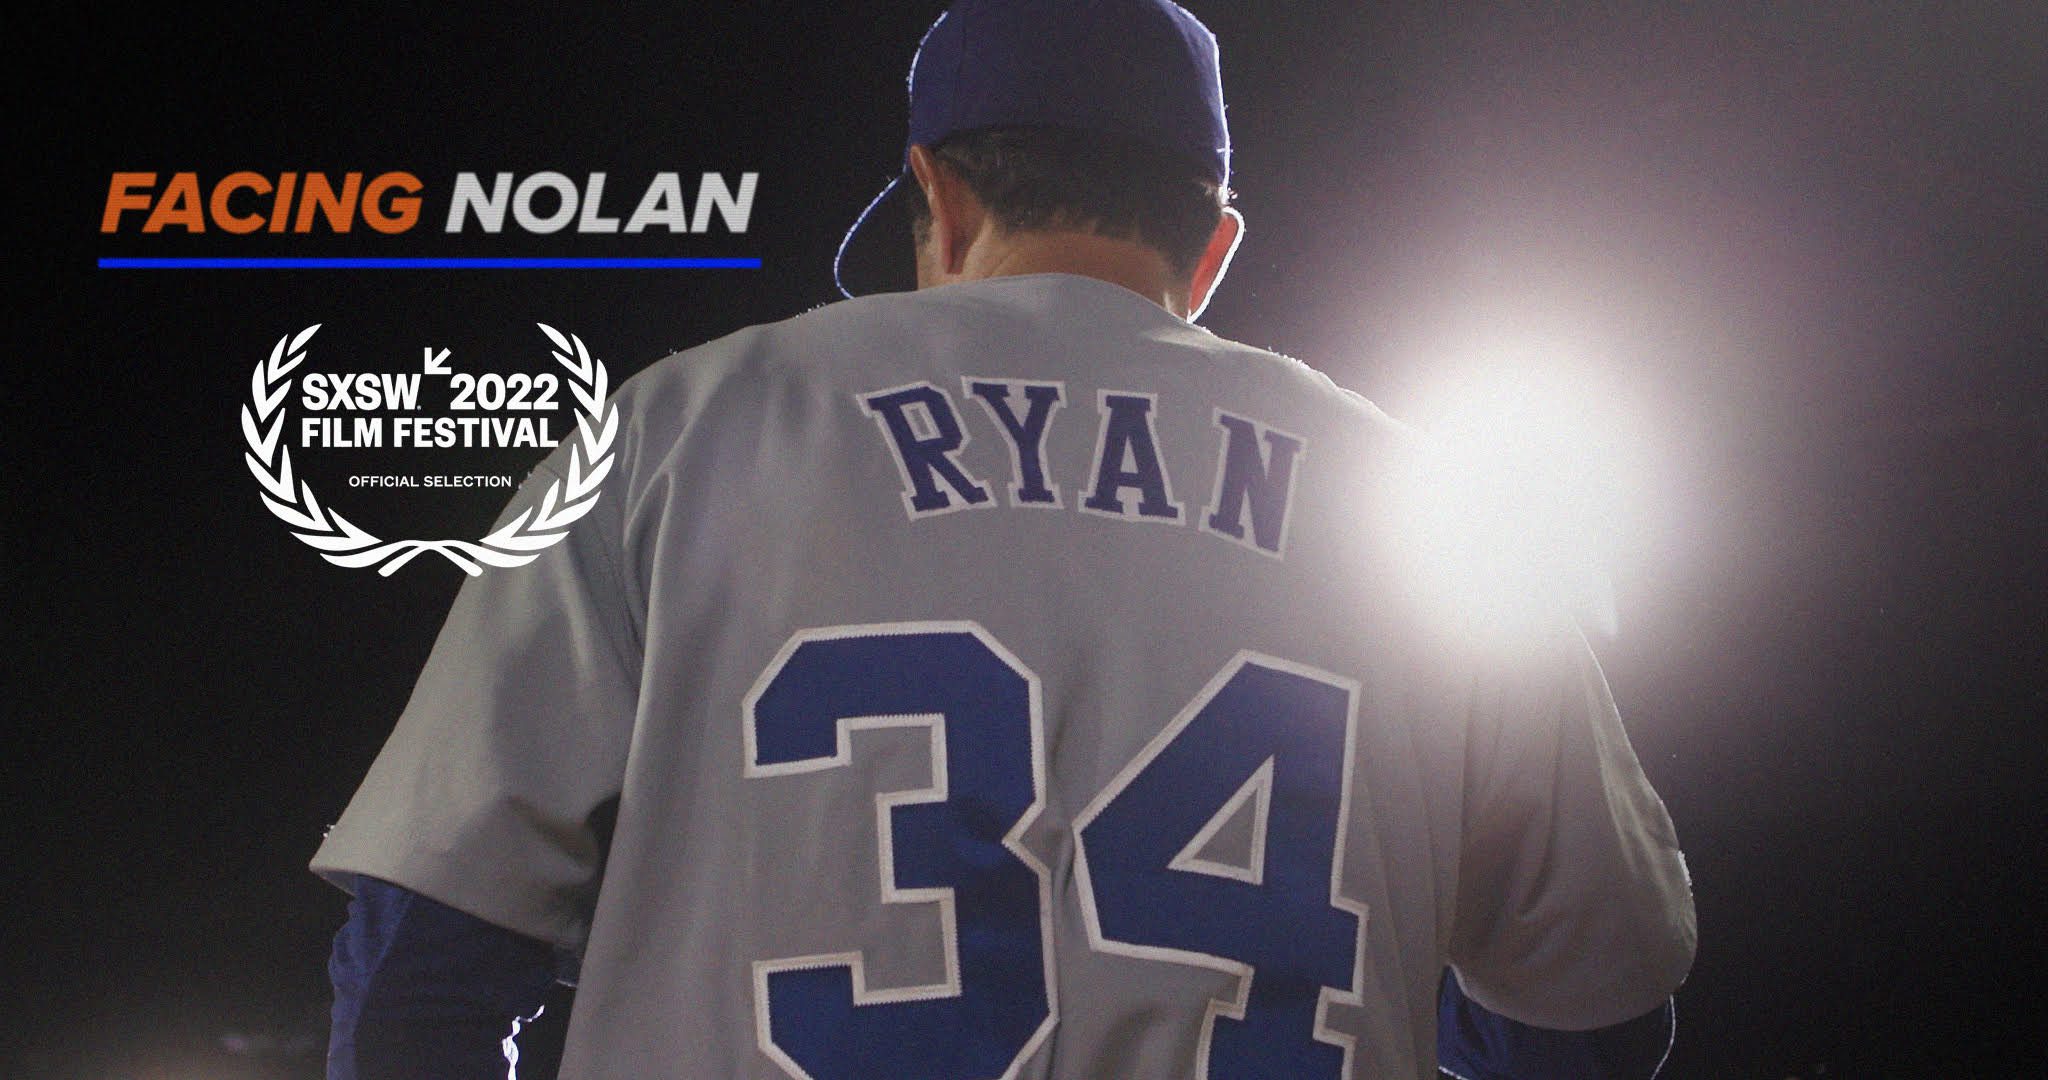 Nolan Ryan Documentary Headed to Theaters Nationwide